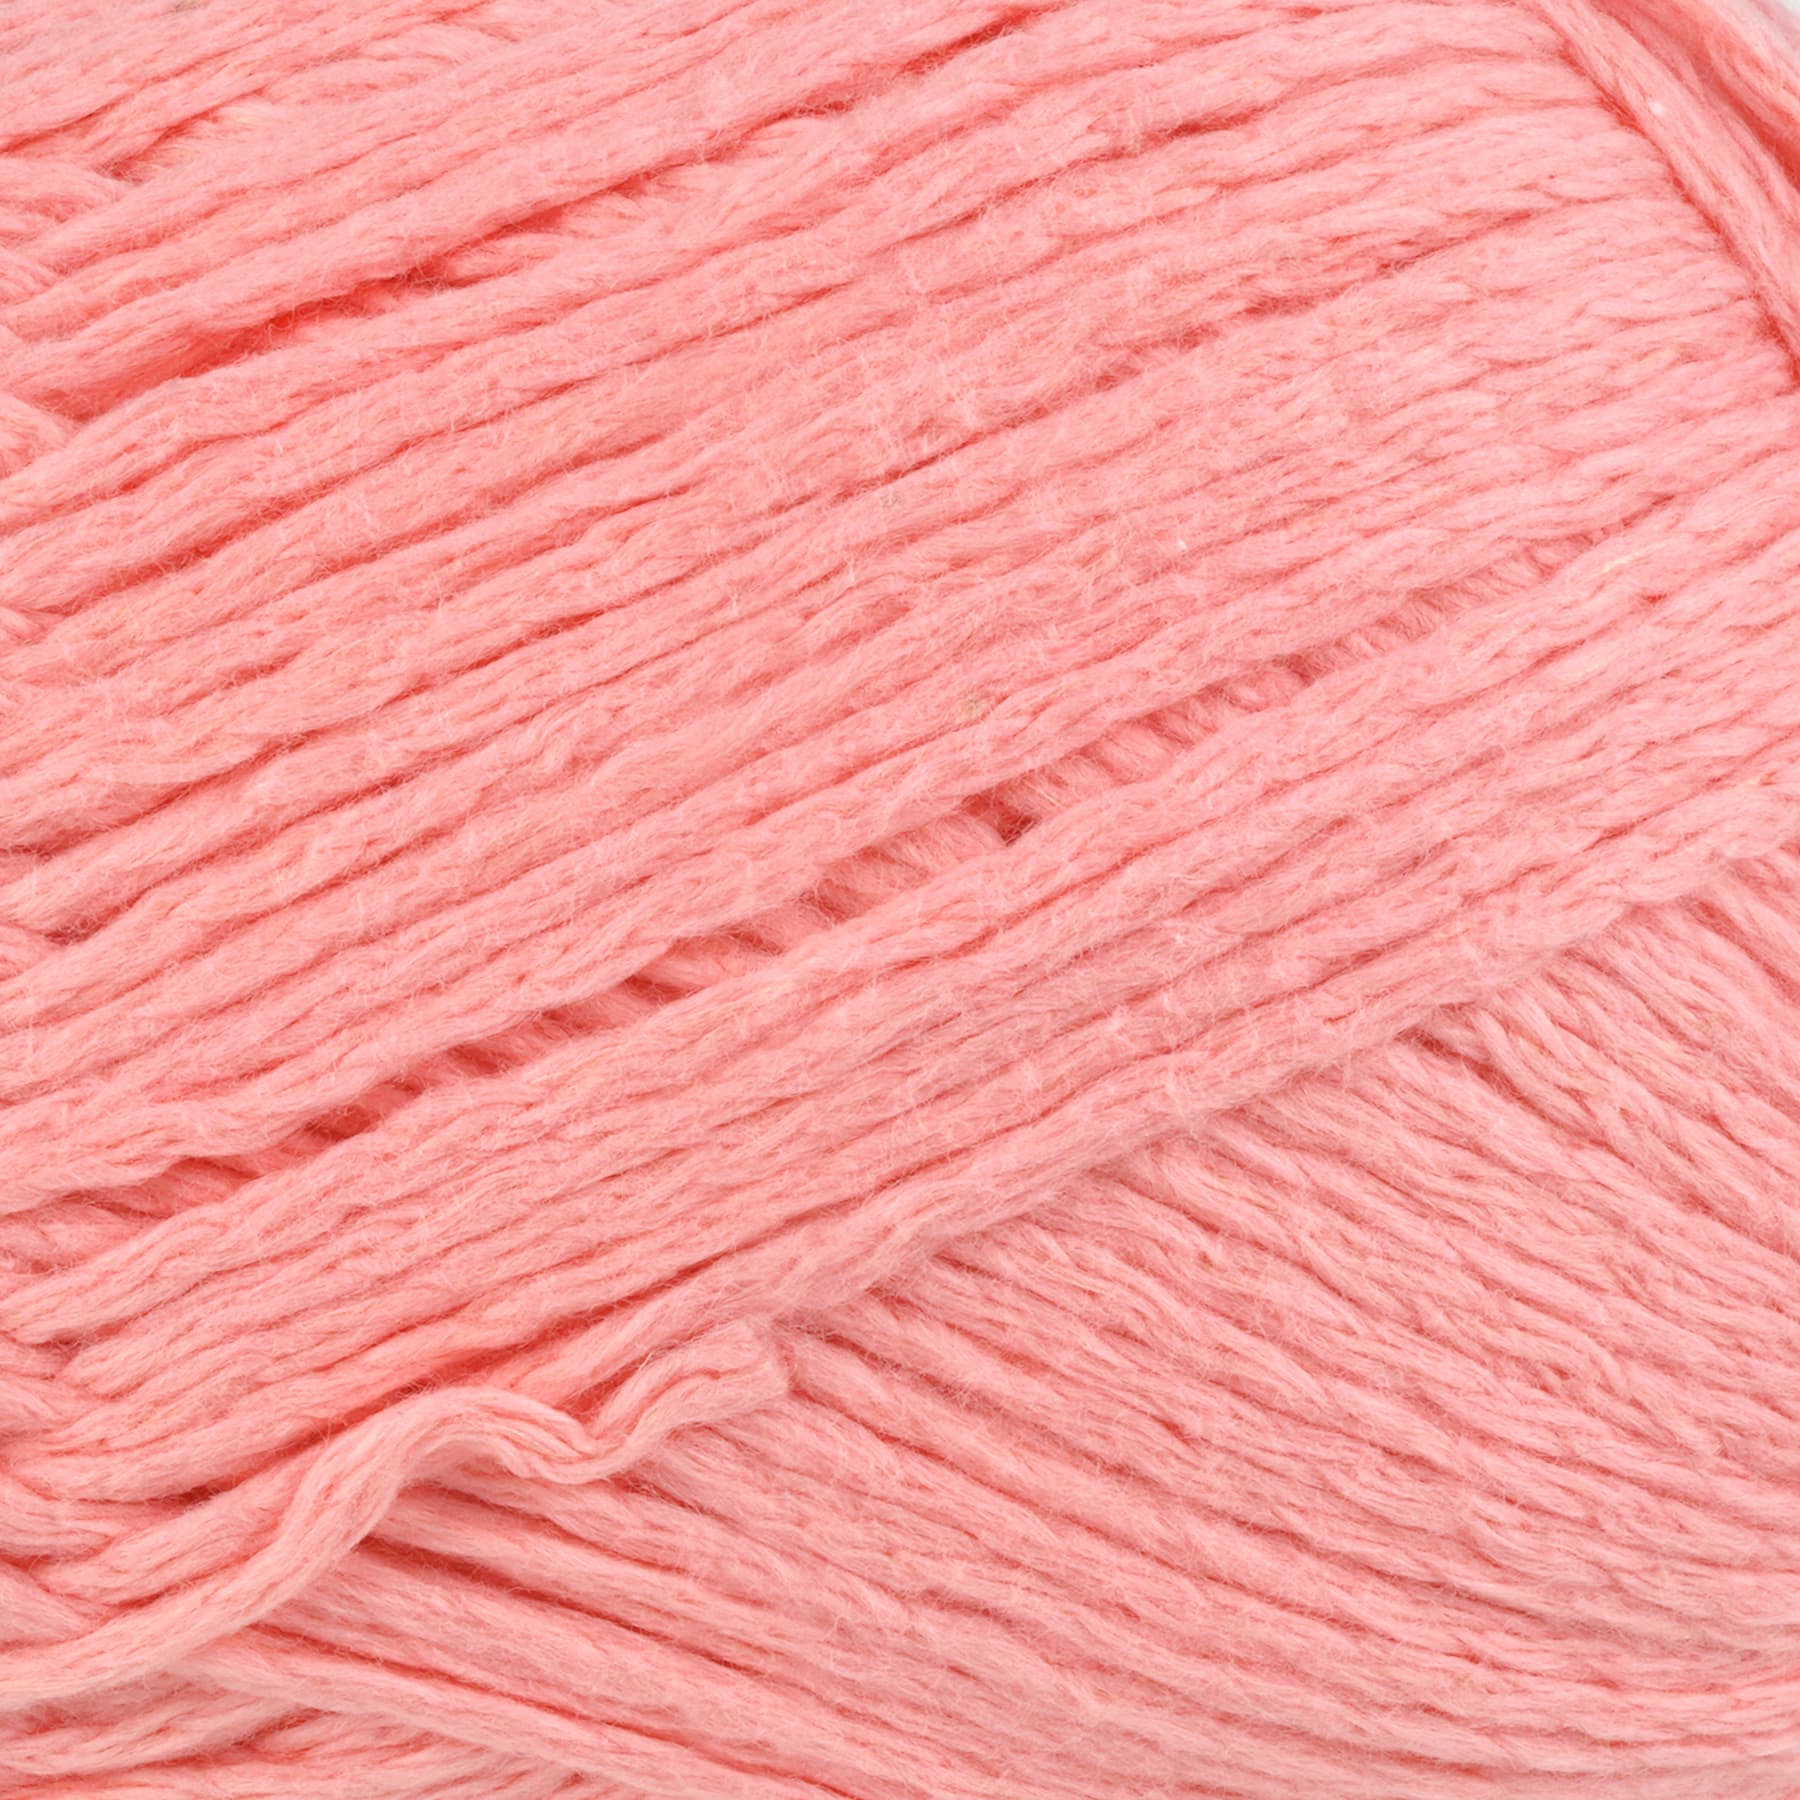 Loops & Threads Cotton Creme Yarn - Budget Yarn Reviews